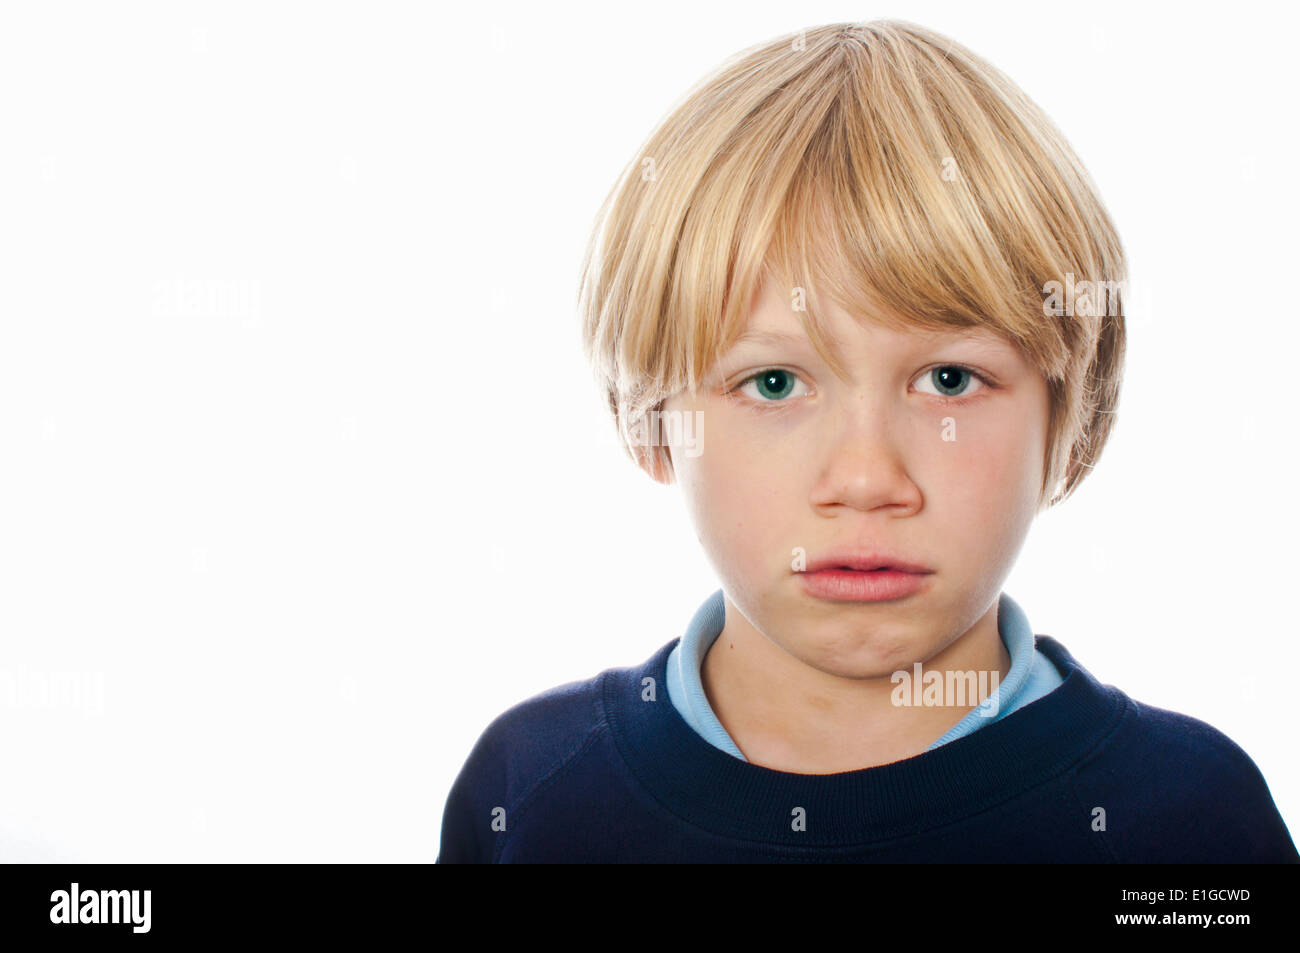 School boy with a sad face Stock Photo